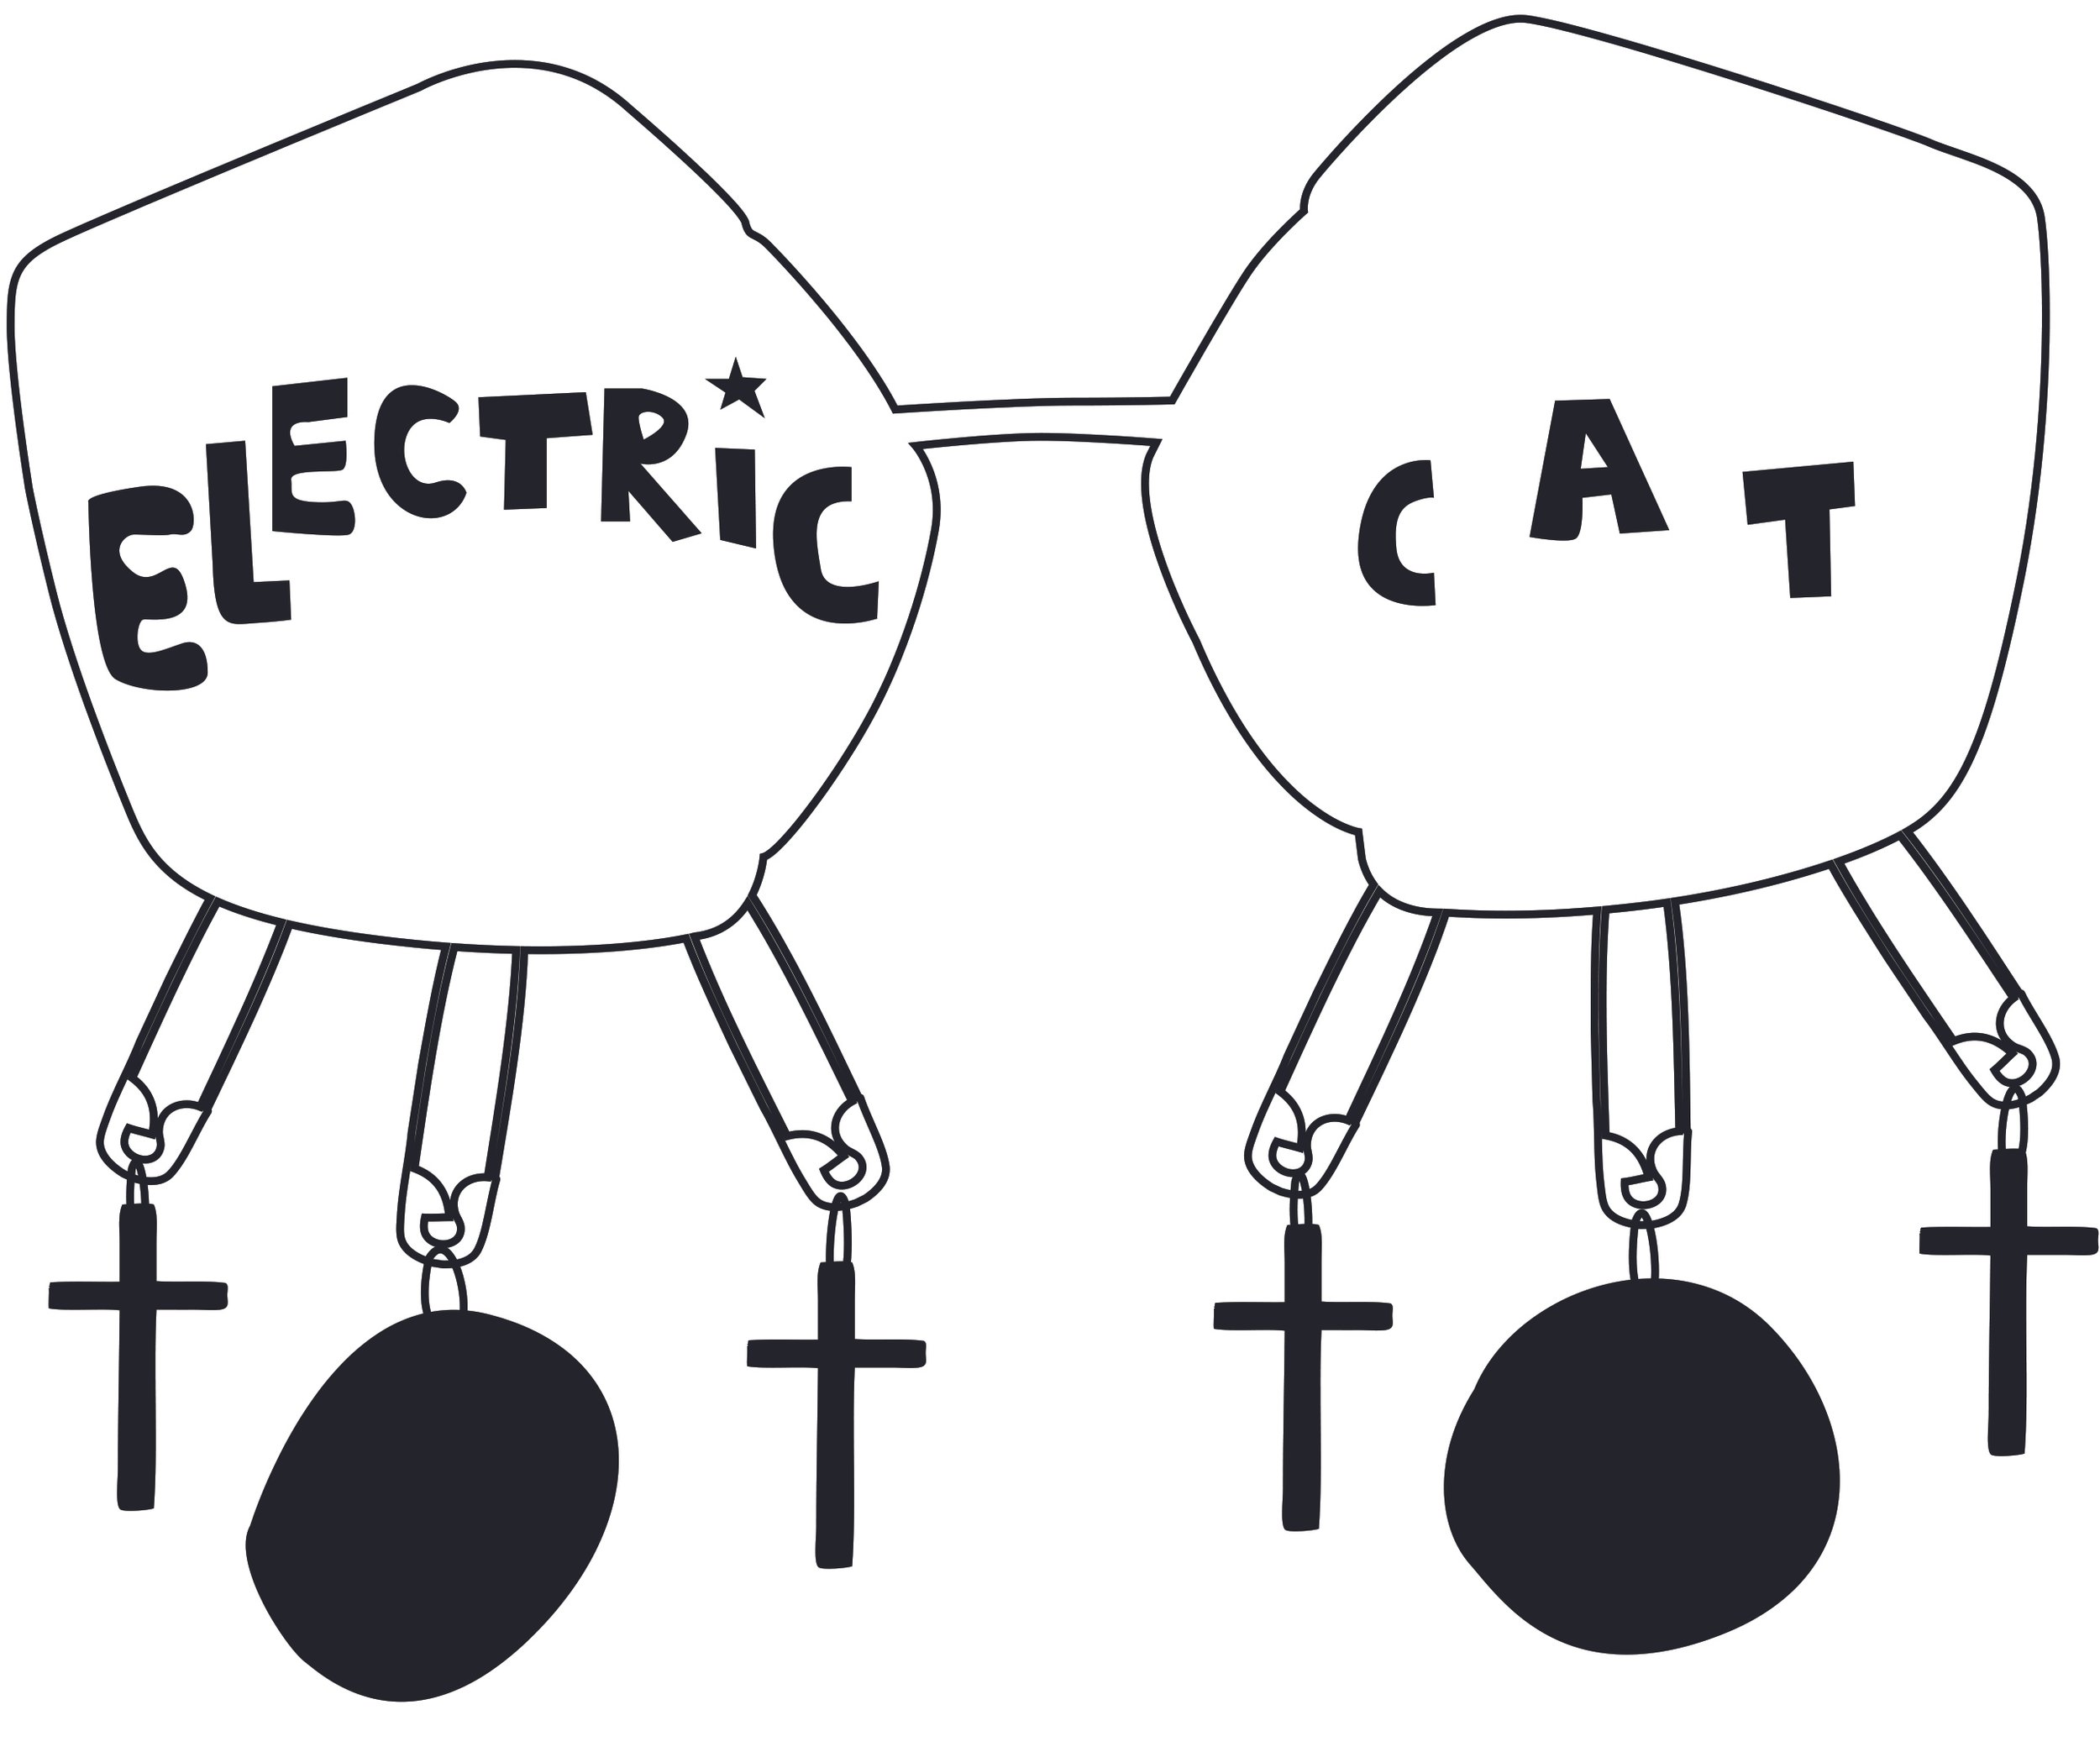 Electric Cat